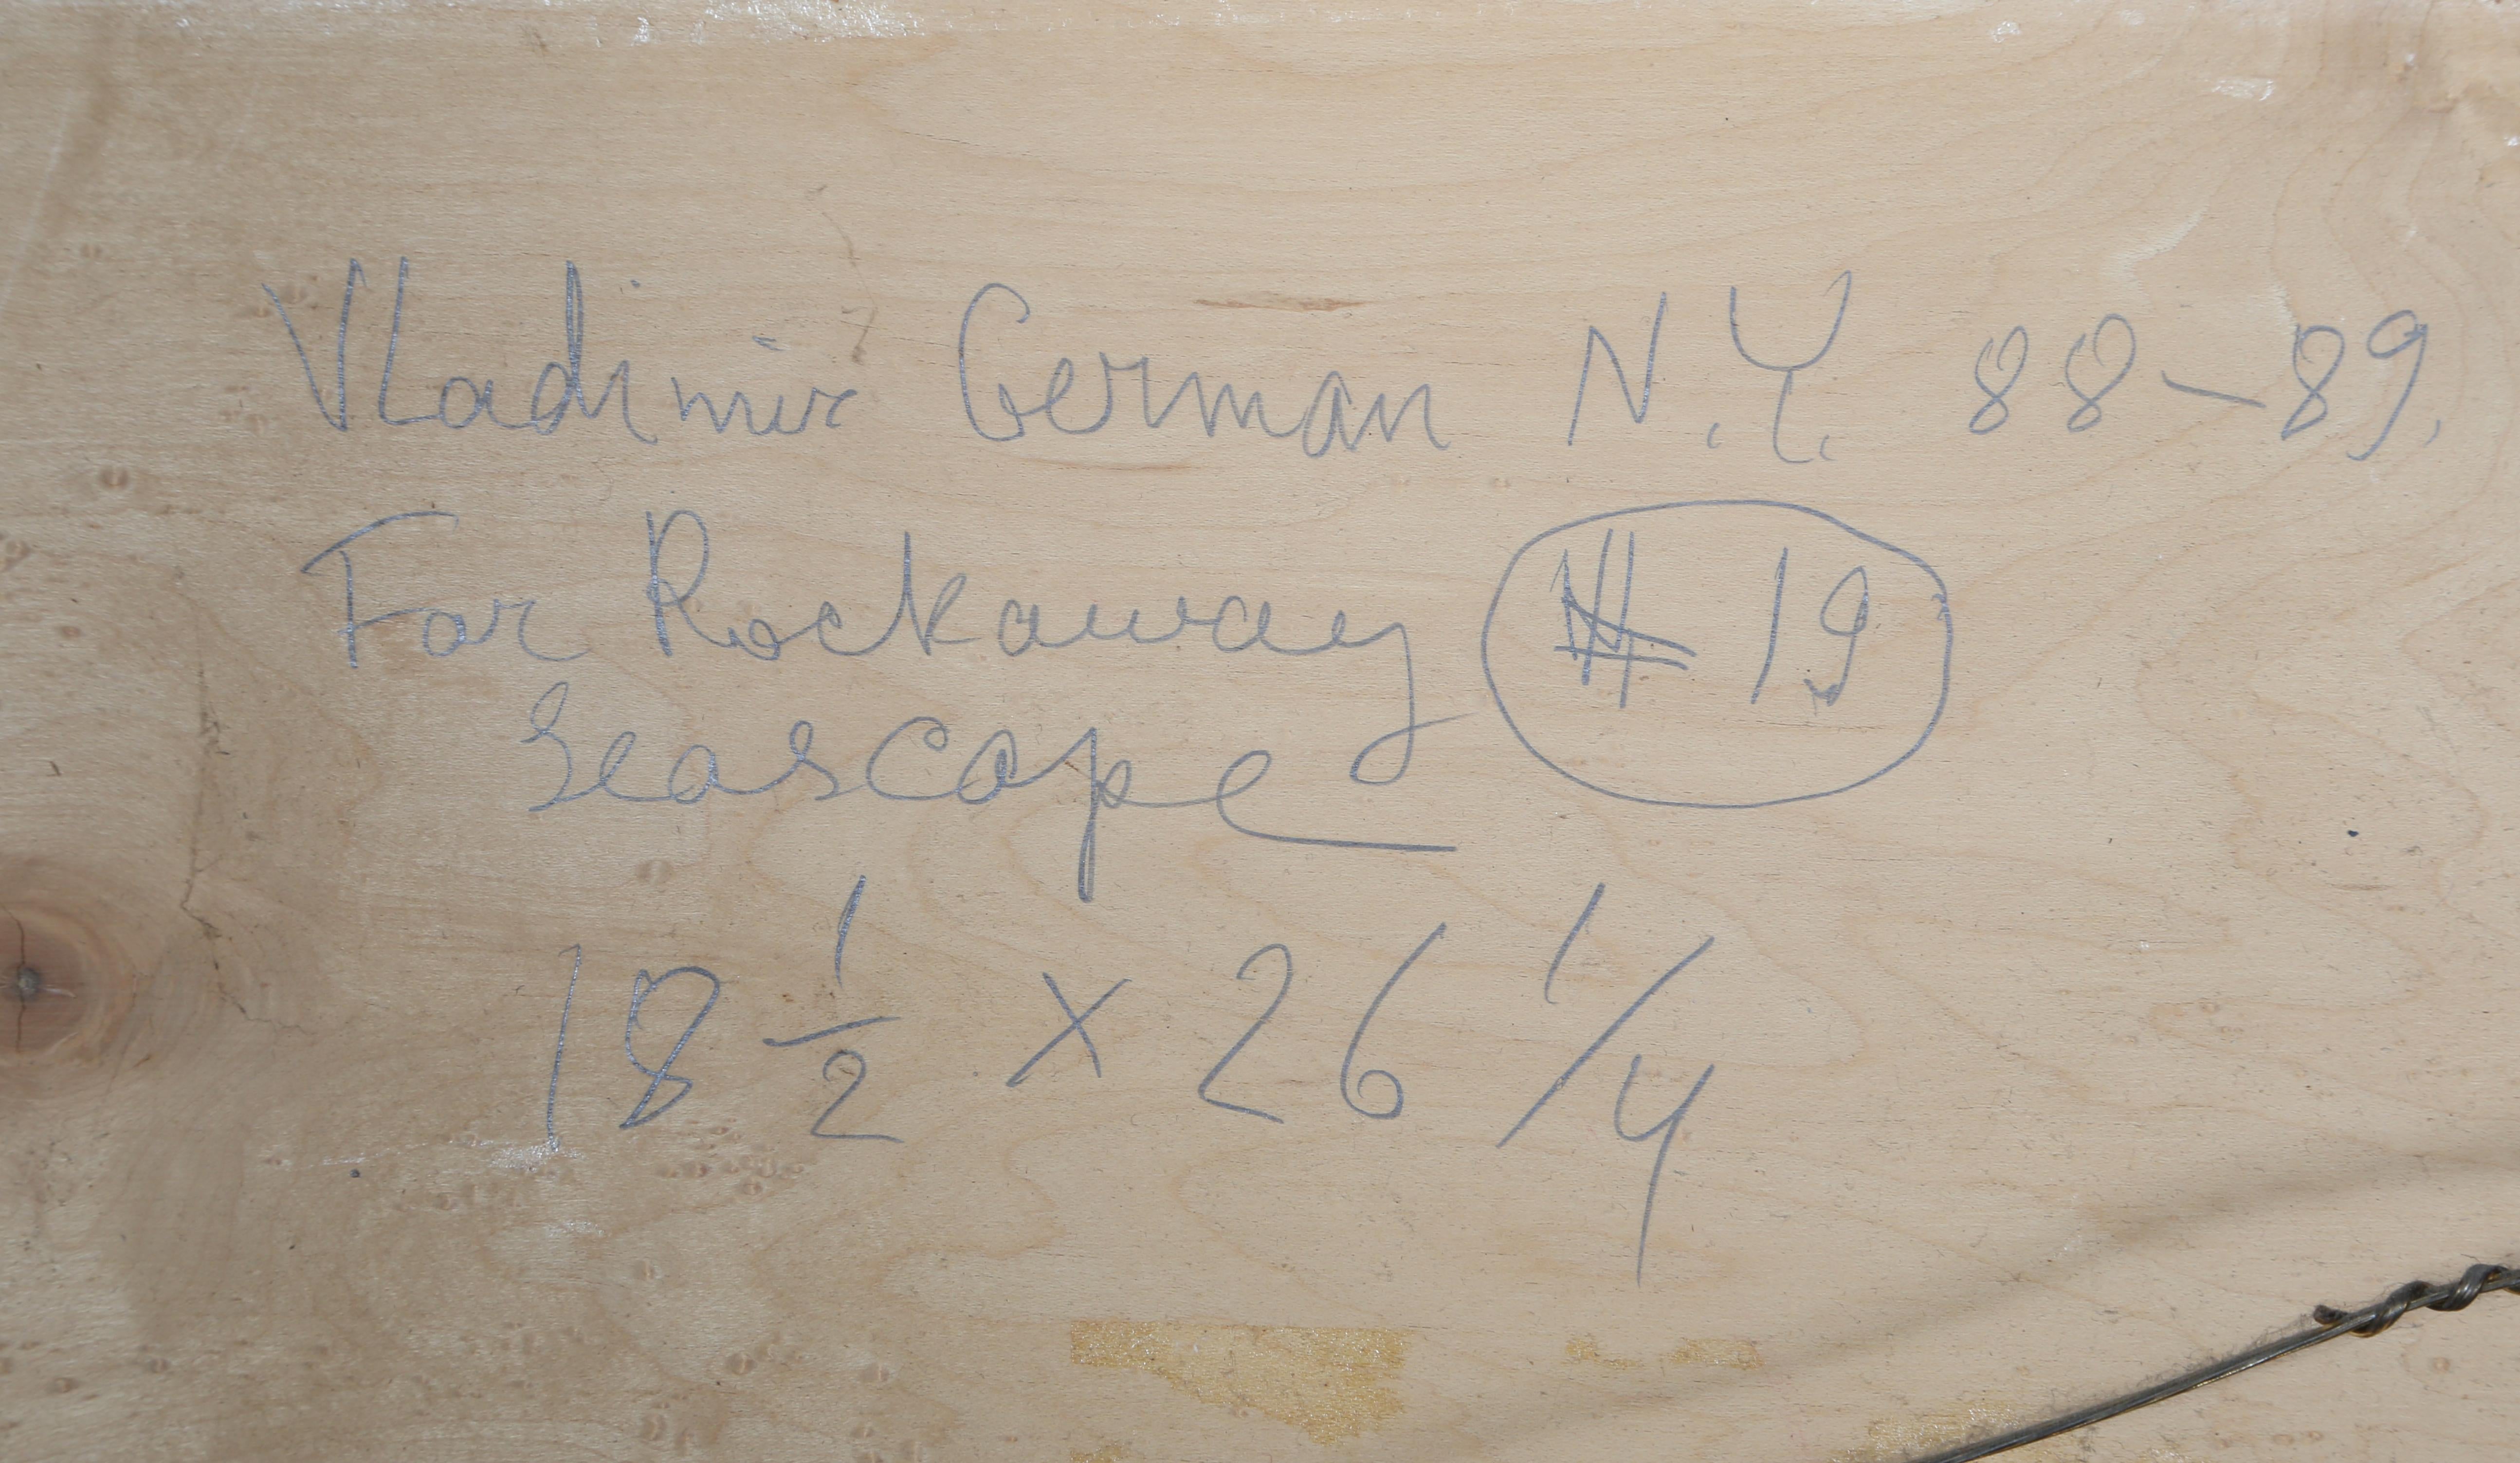 Artist: Vladimir German, Russian/American (1940 - )
Title: Far Rockaway Seascape
Year: 1988 - 89
Medium: Oil on Paper mounted on Board, signed verso
Size: 18.5 in. x 26.25 in. (46.99 cm x 66.68 cm)